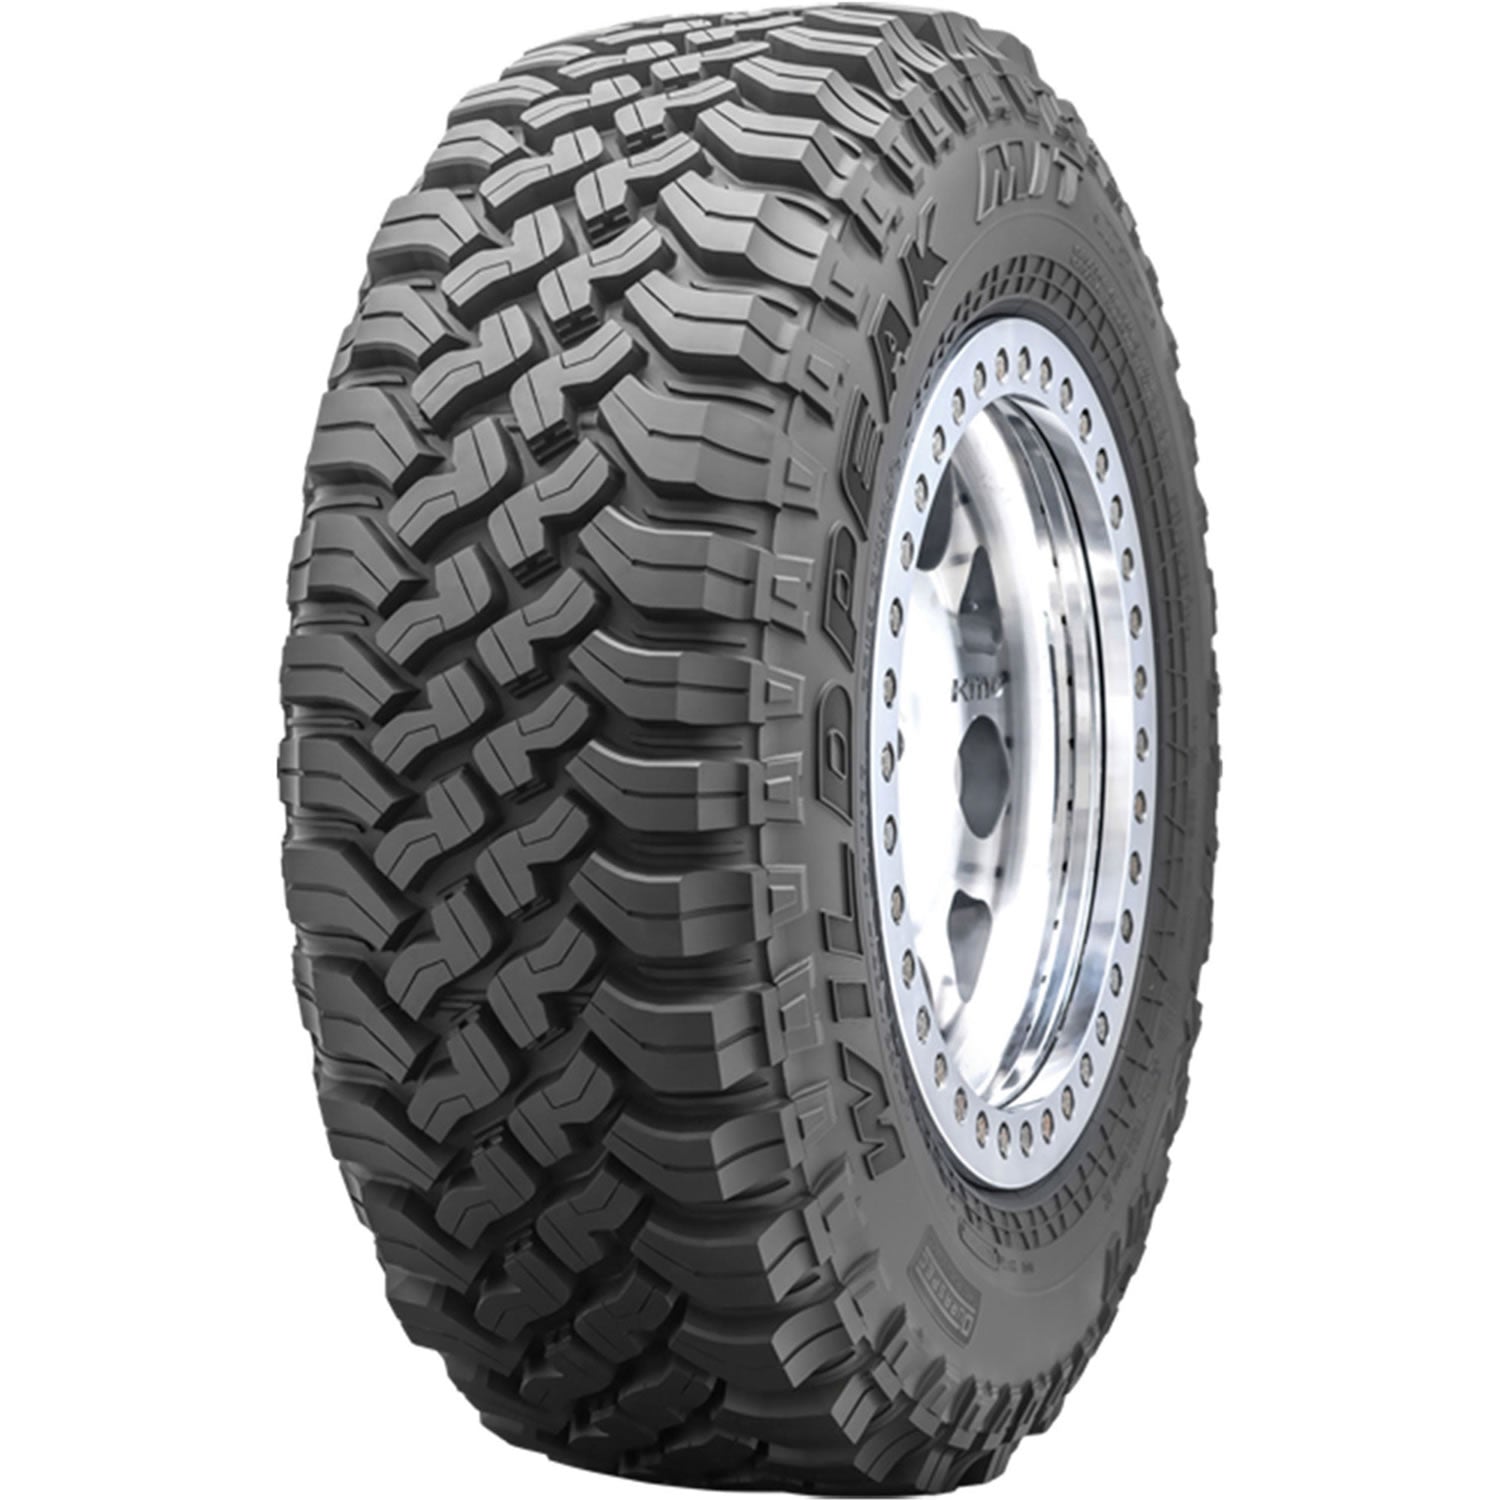 FALKEN WILDPEAK MT LT285/70R17 (32.8X11.2R 17) Tires